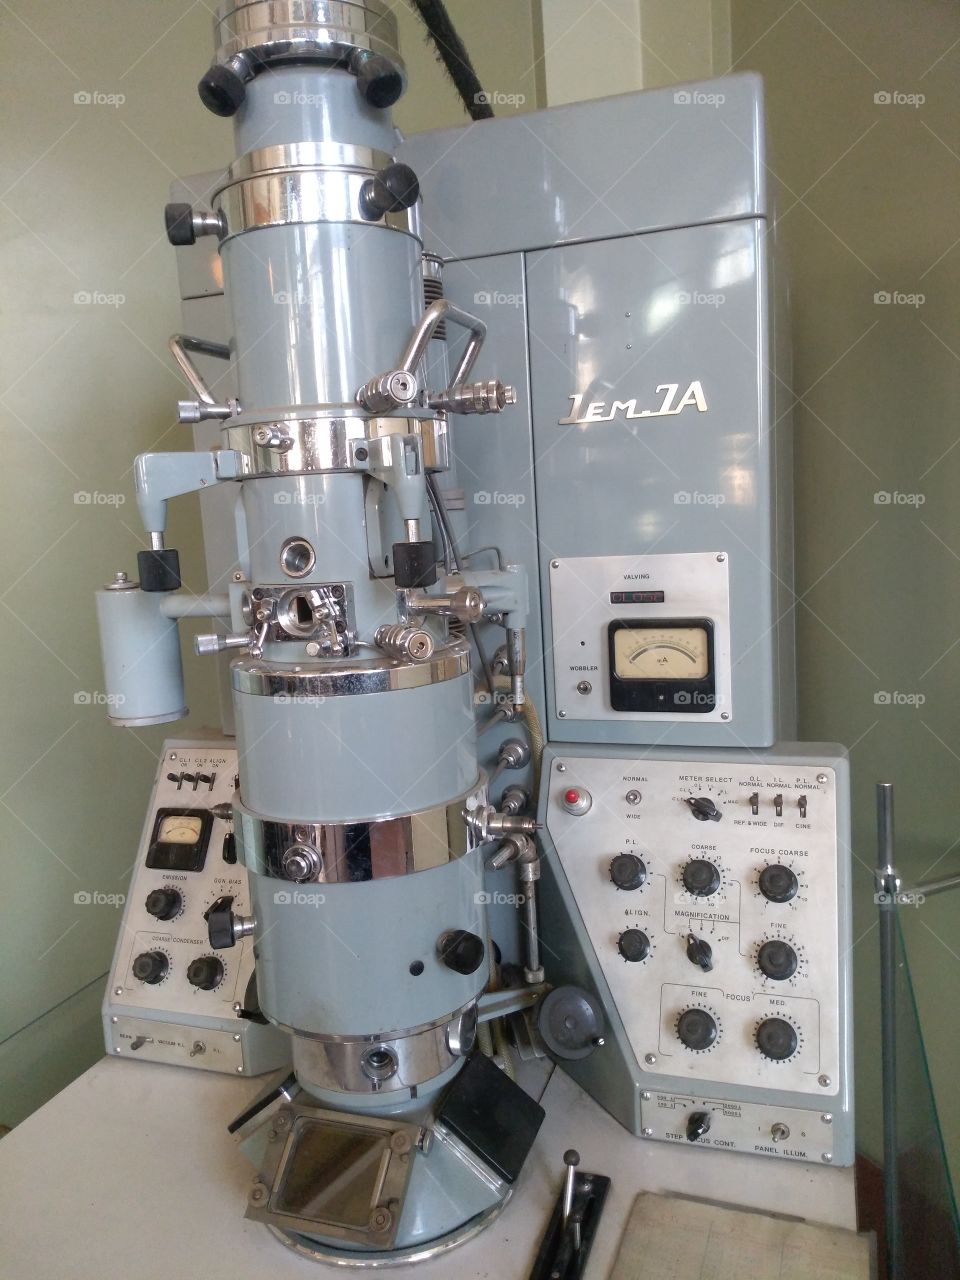 JEM-7A type electron microscope